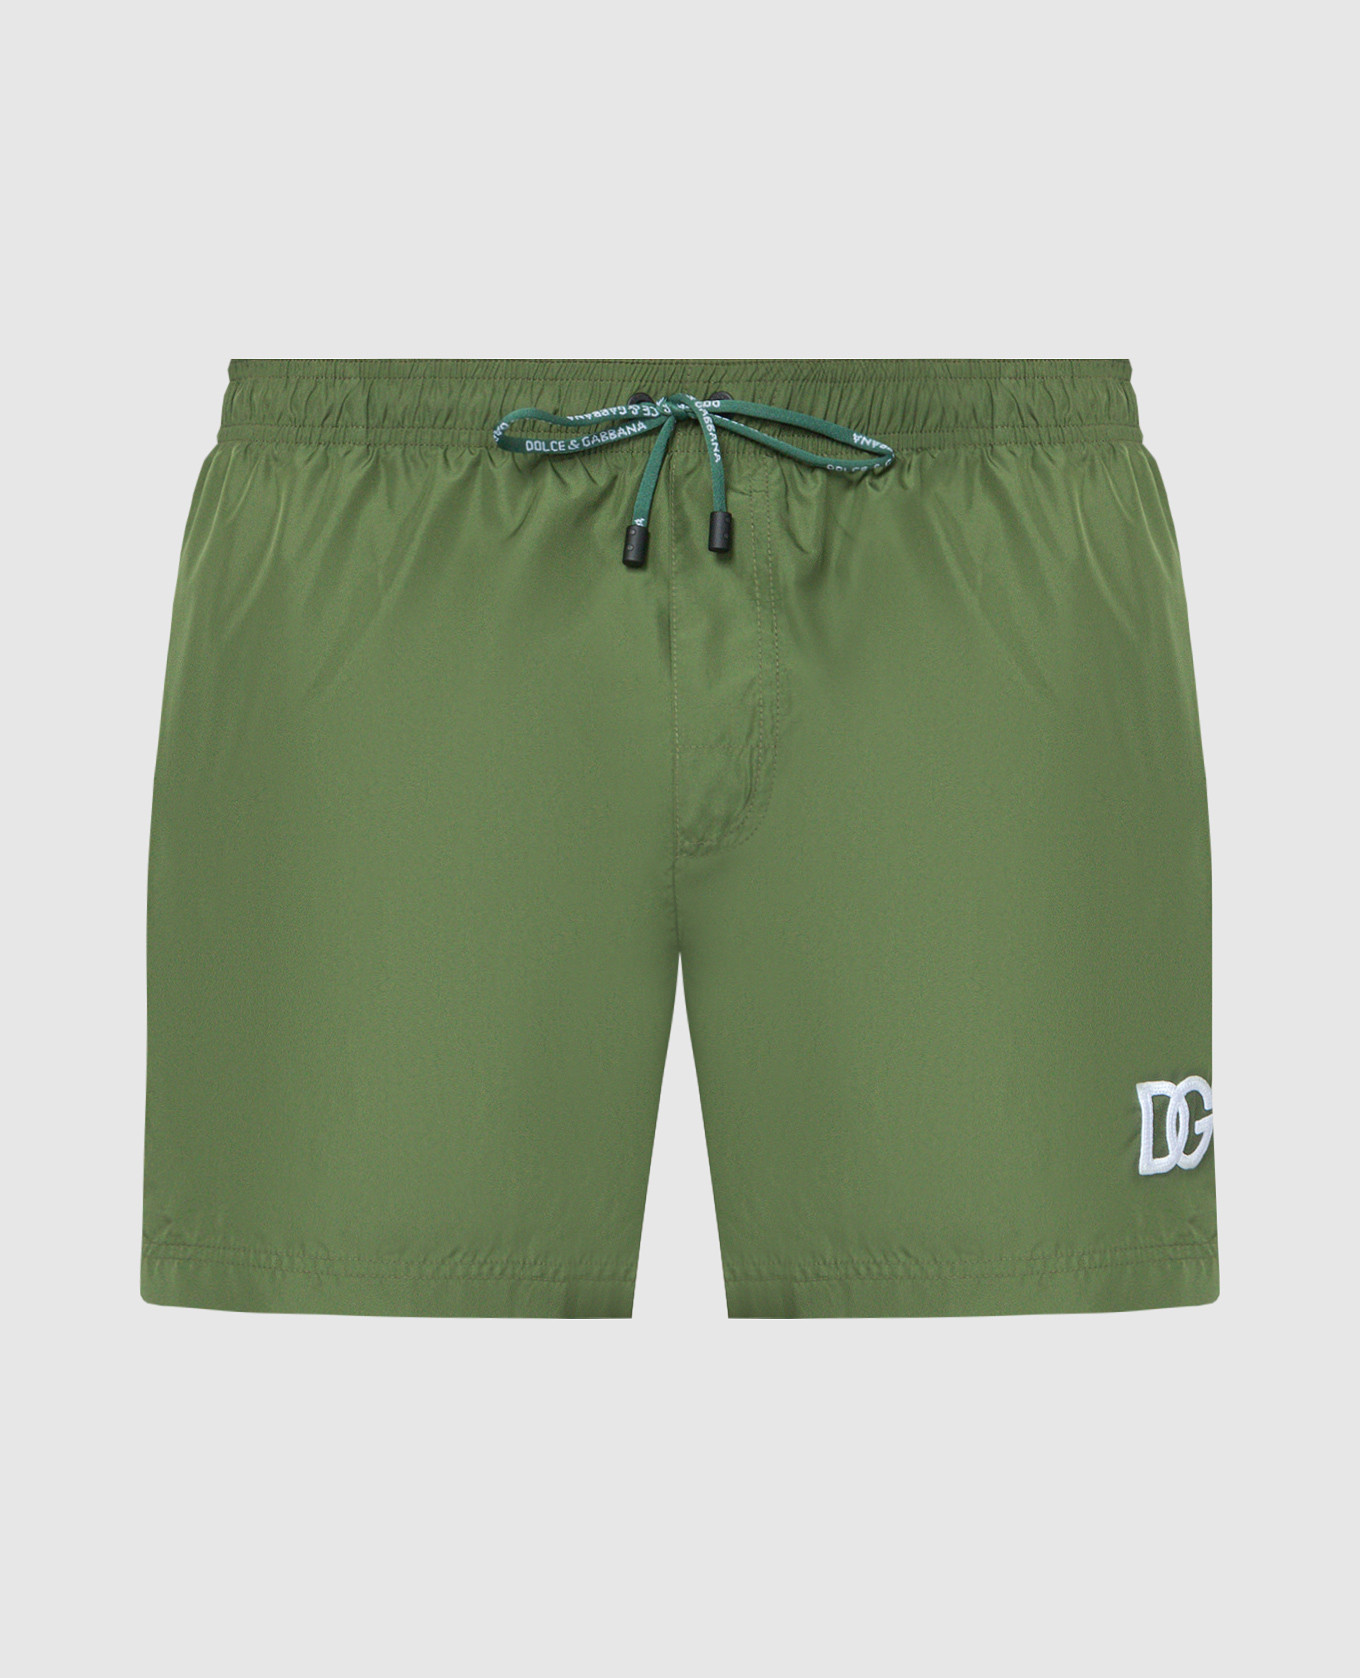 Green swim shorts with logo monogram patch